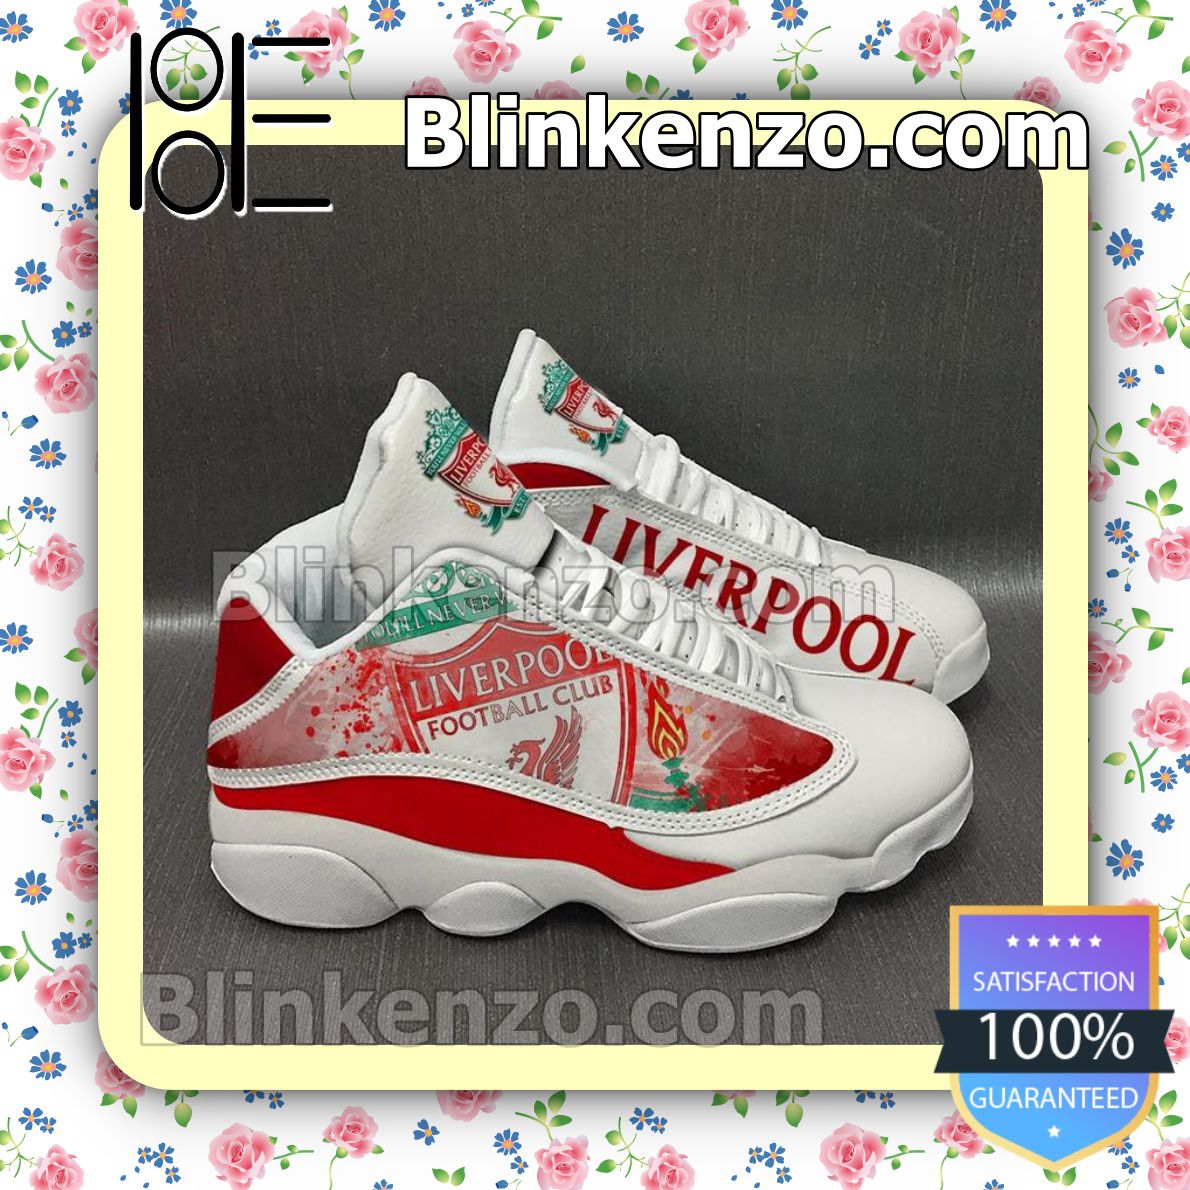 Liverpool Football Club Jordan Running Shoes - Blinkenzo